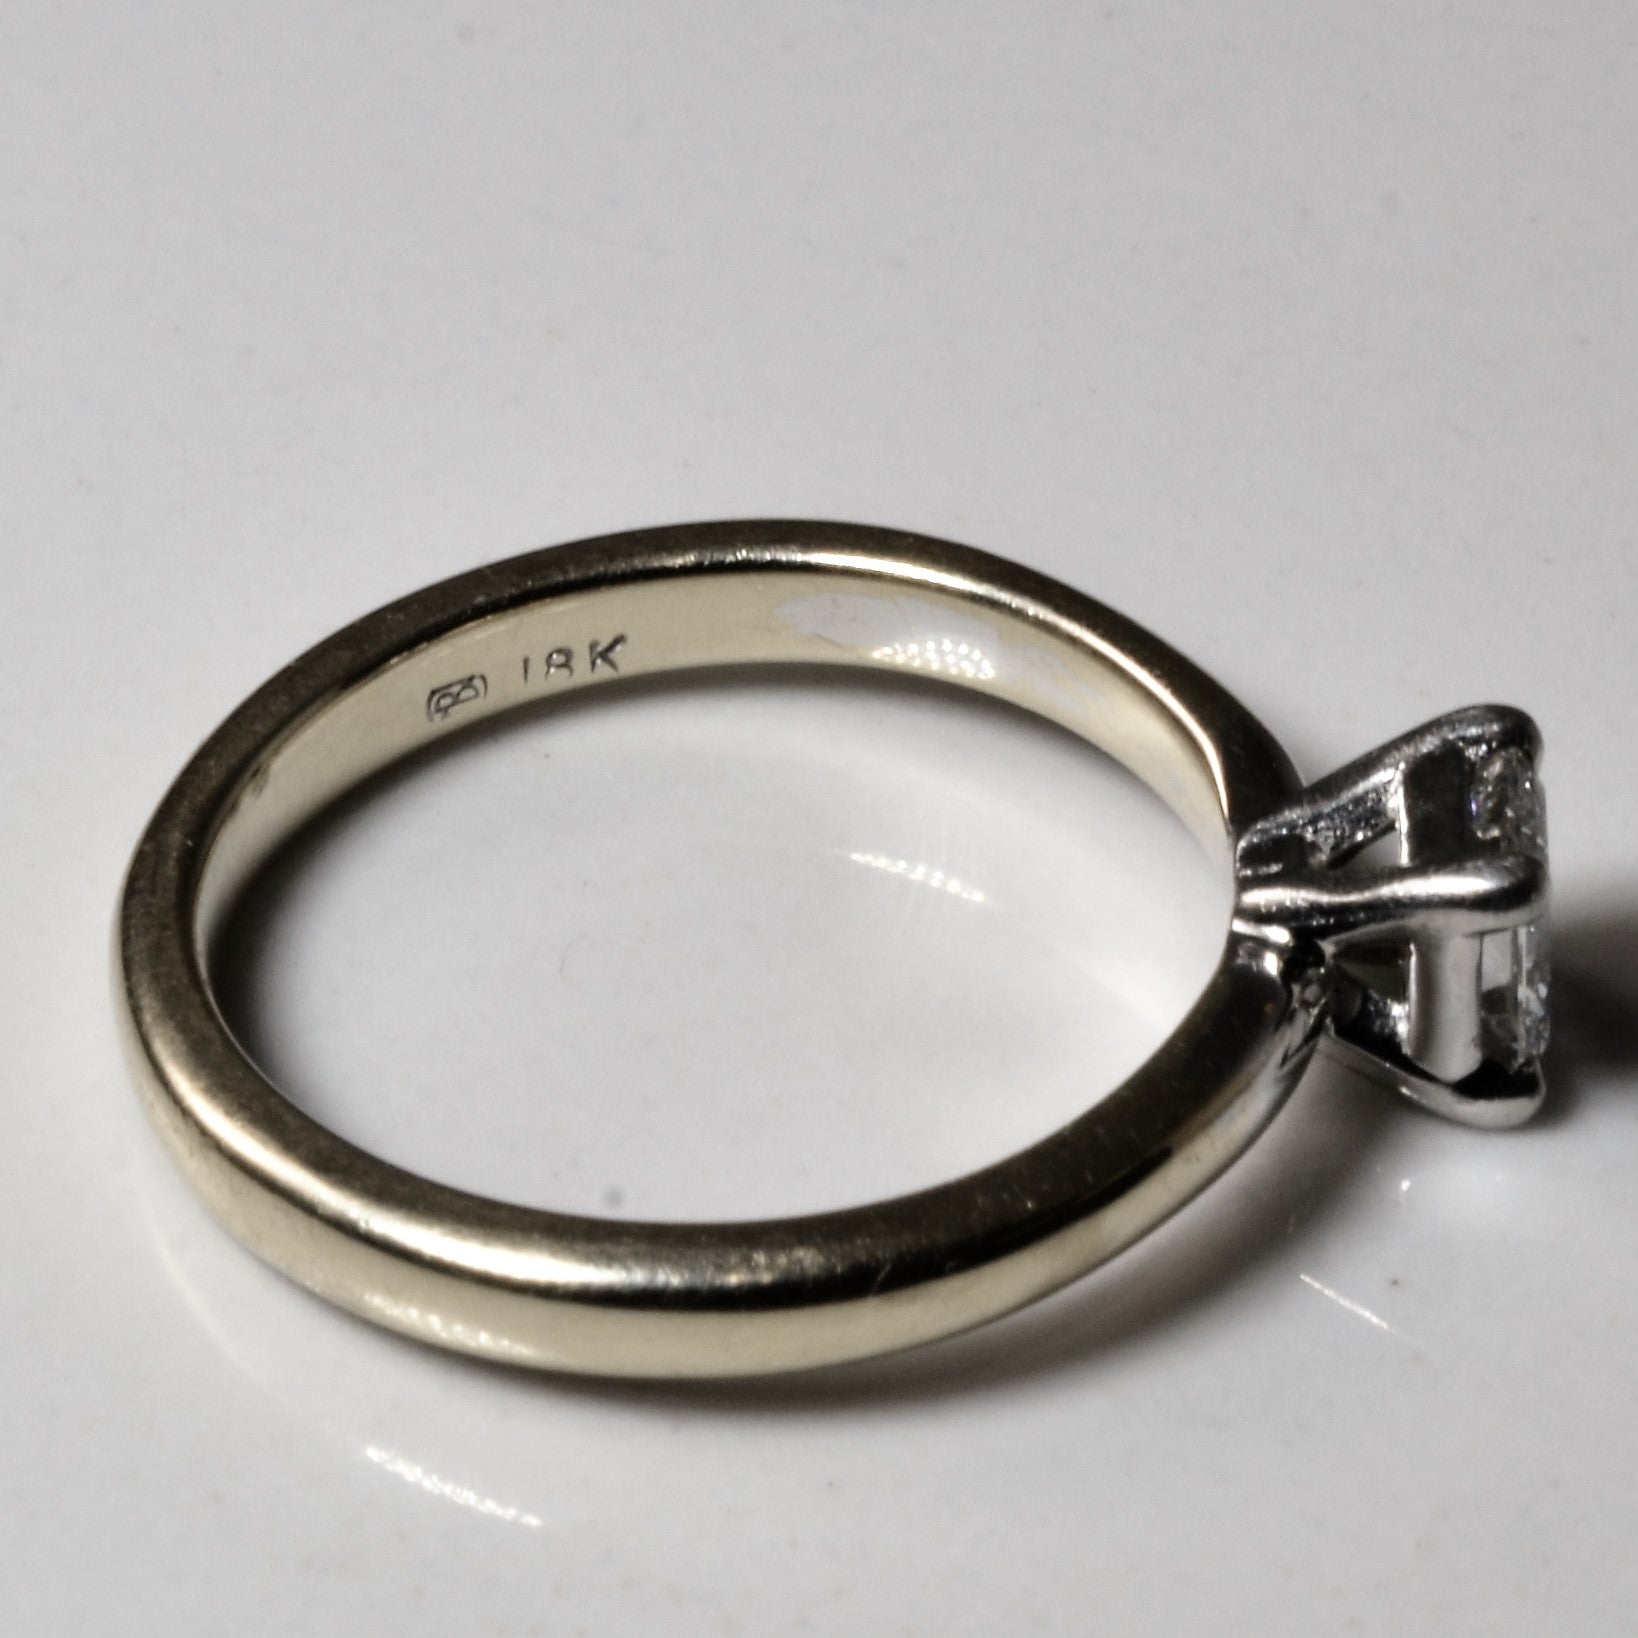 Blue Nile' GIA Certified Princess Diamond Engagement Ring | 0.38ct | SZ 5.25 |